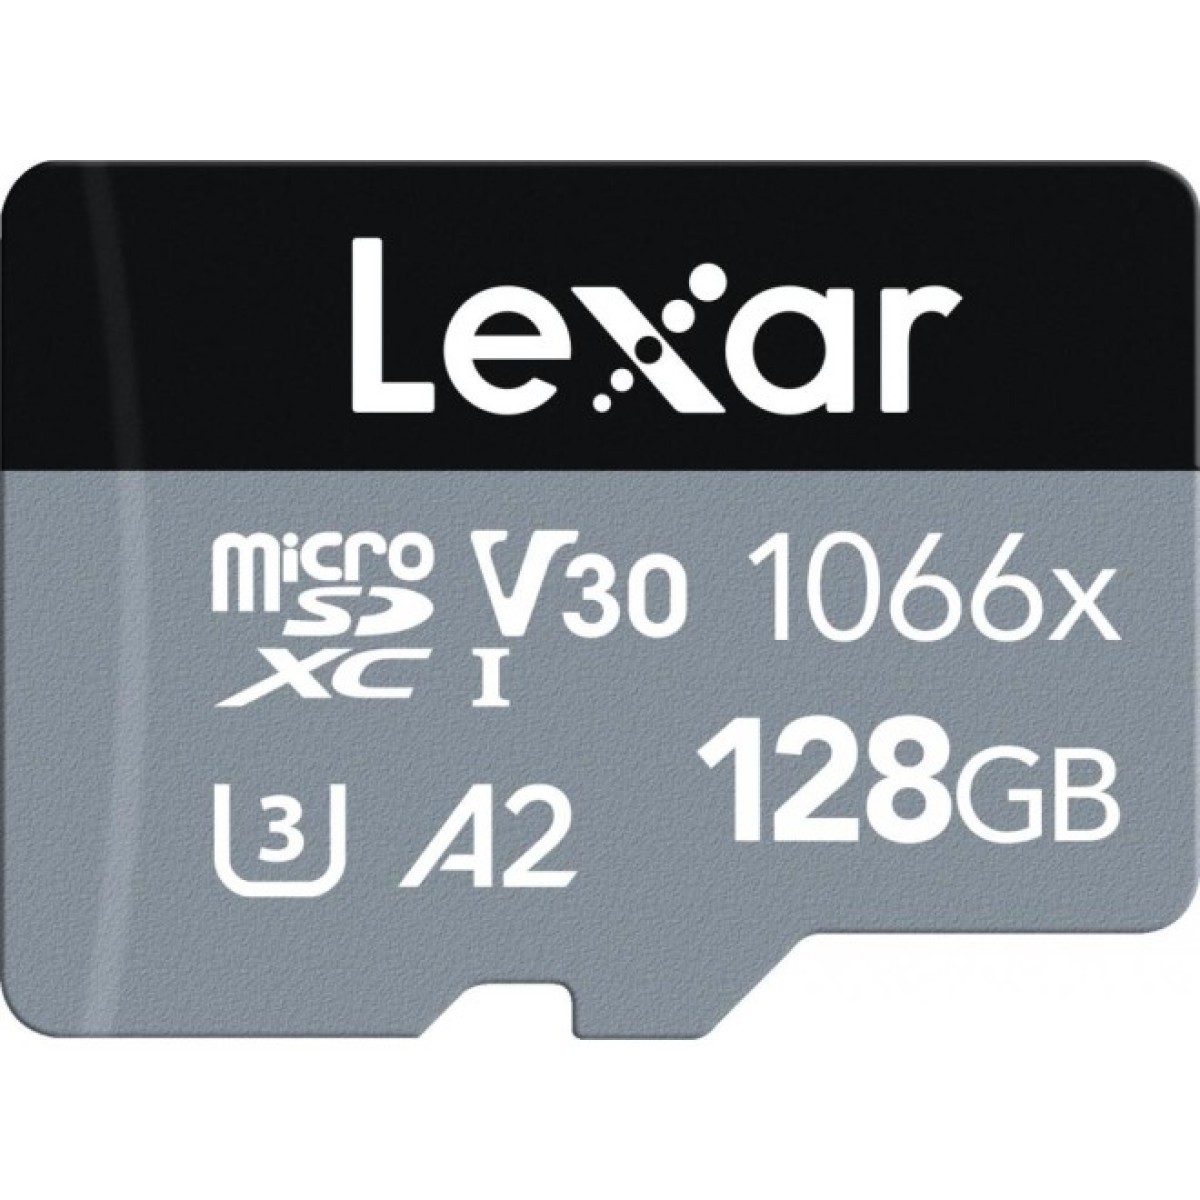 Карта памяти Lexar 128GB microSDXC class 10 UHS-I 1066x Silver (LMS1066128G-BNANG) 256_256.jpg